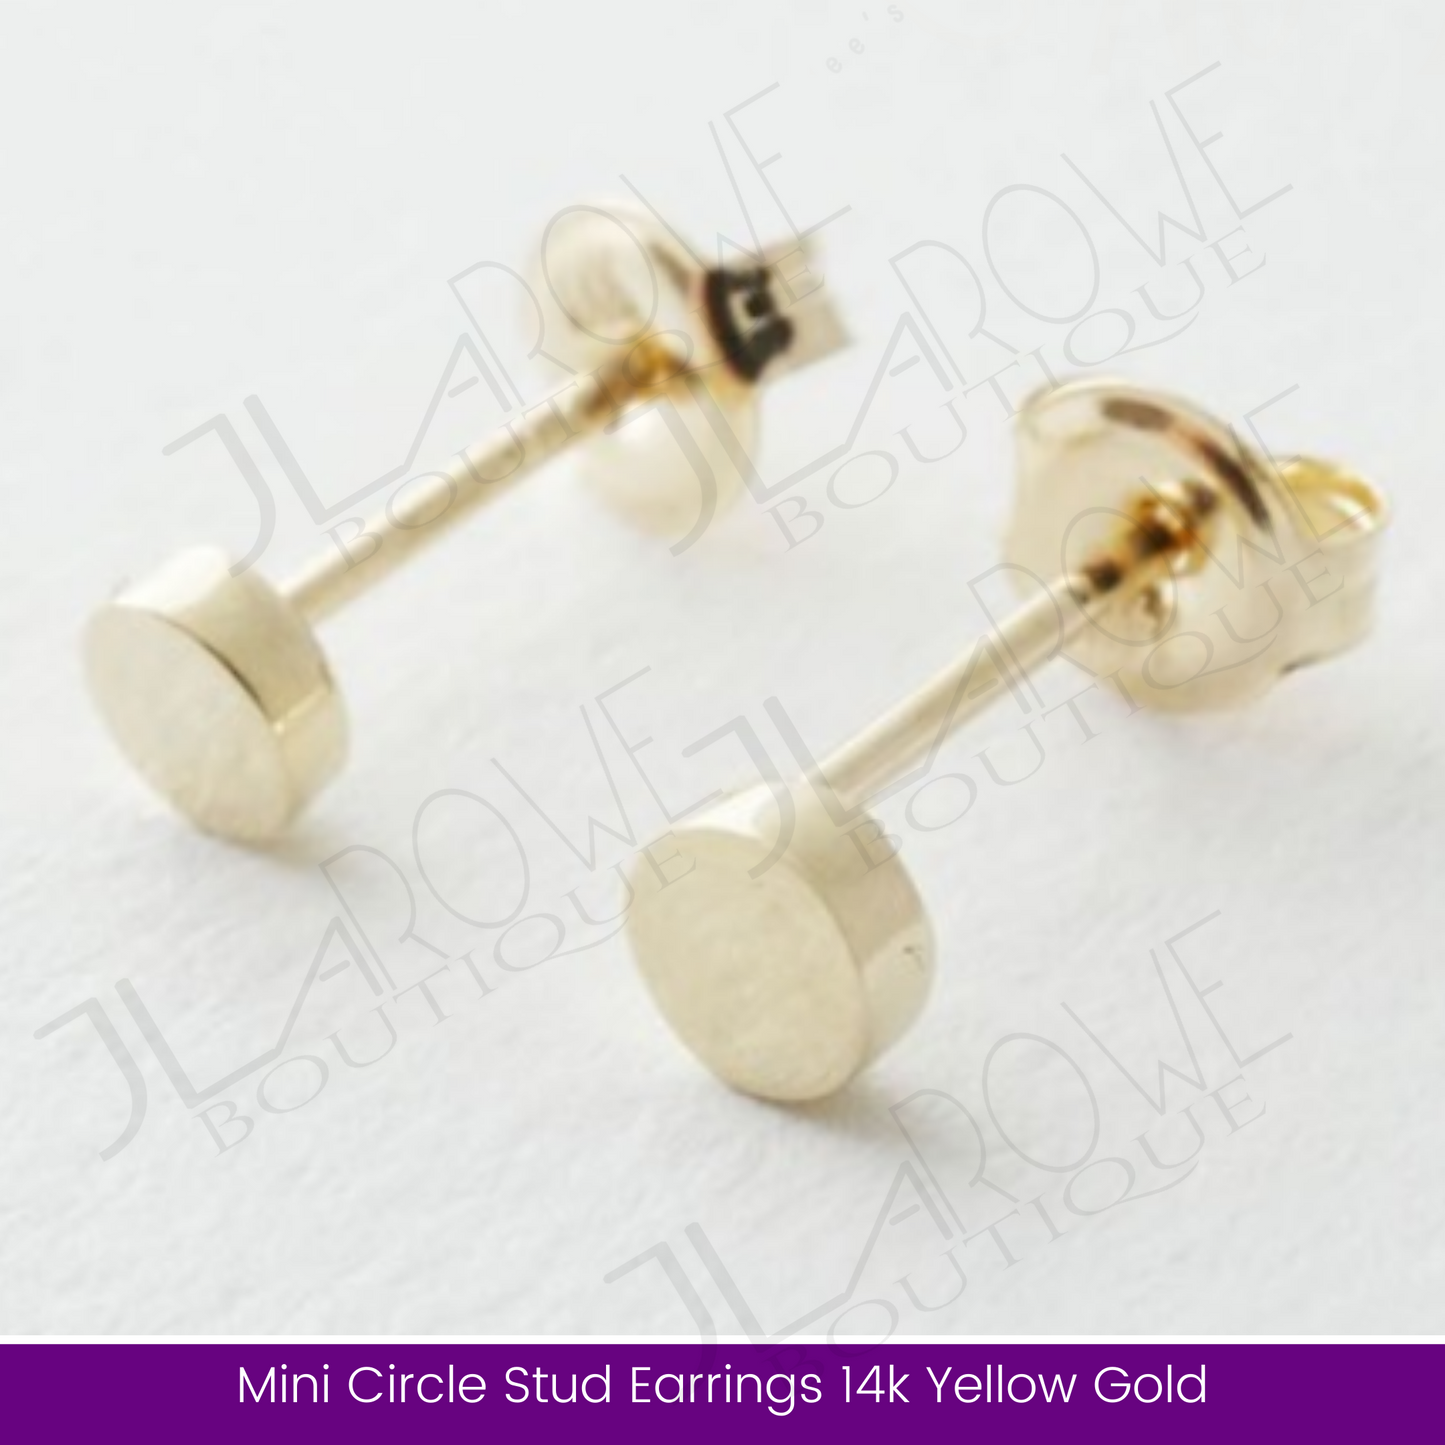 Mini Circle Stud Earrings 14k Yellow Gold (Limited Stock)